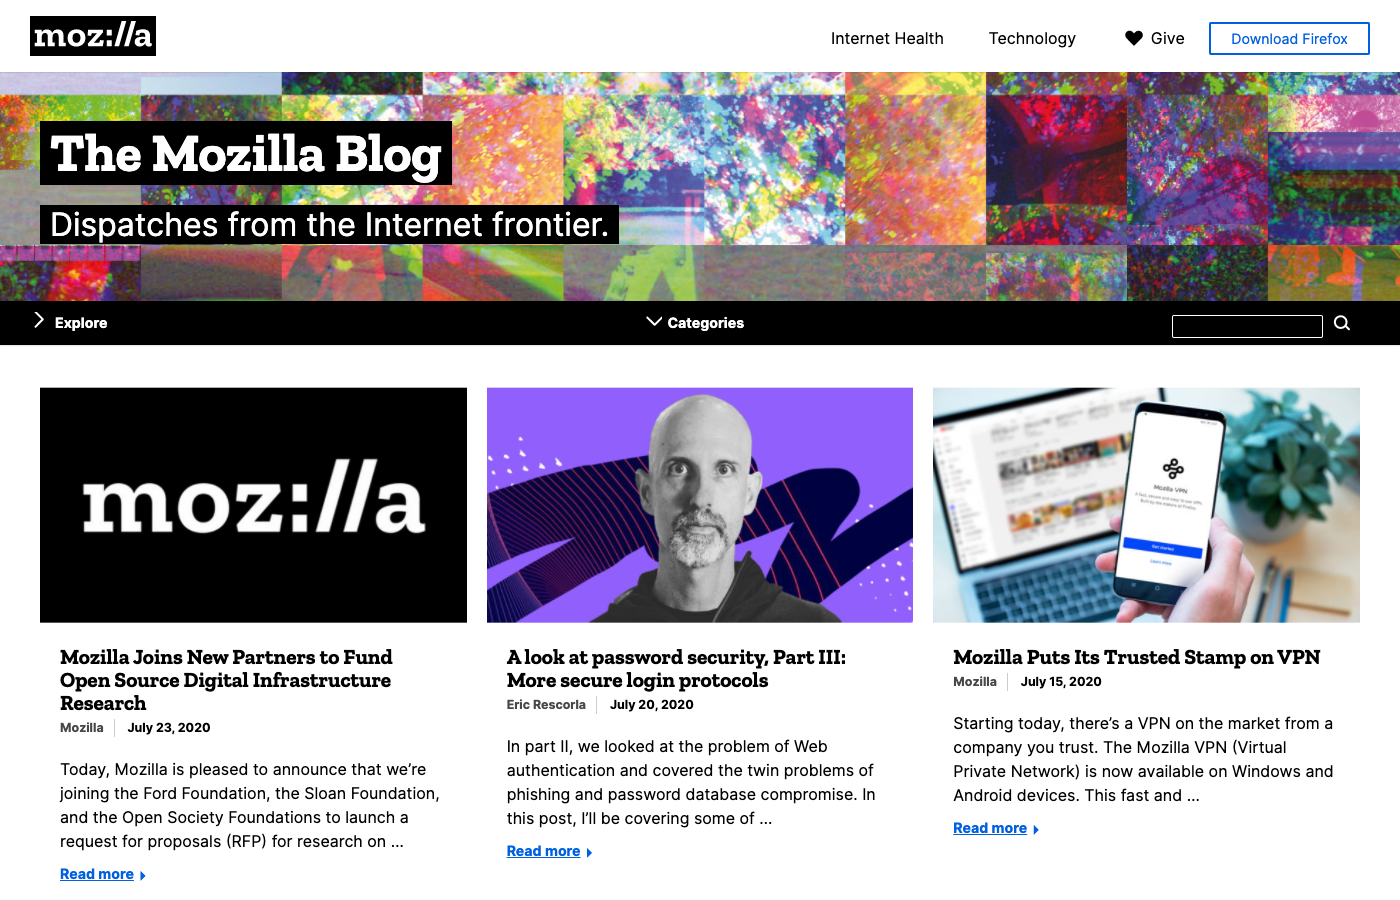 The Mozilla Blog